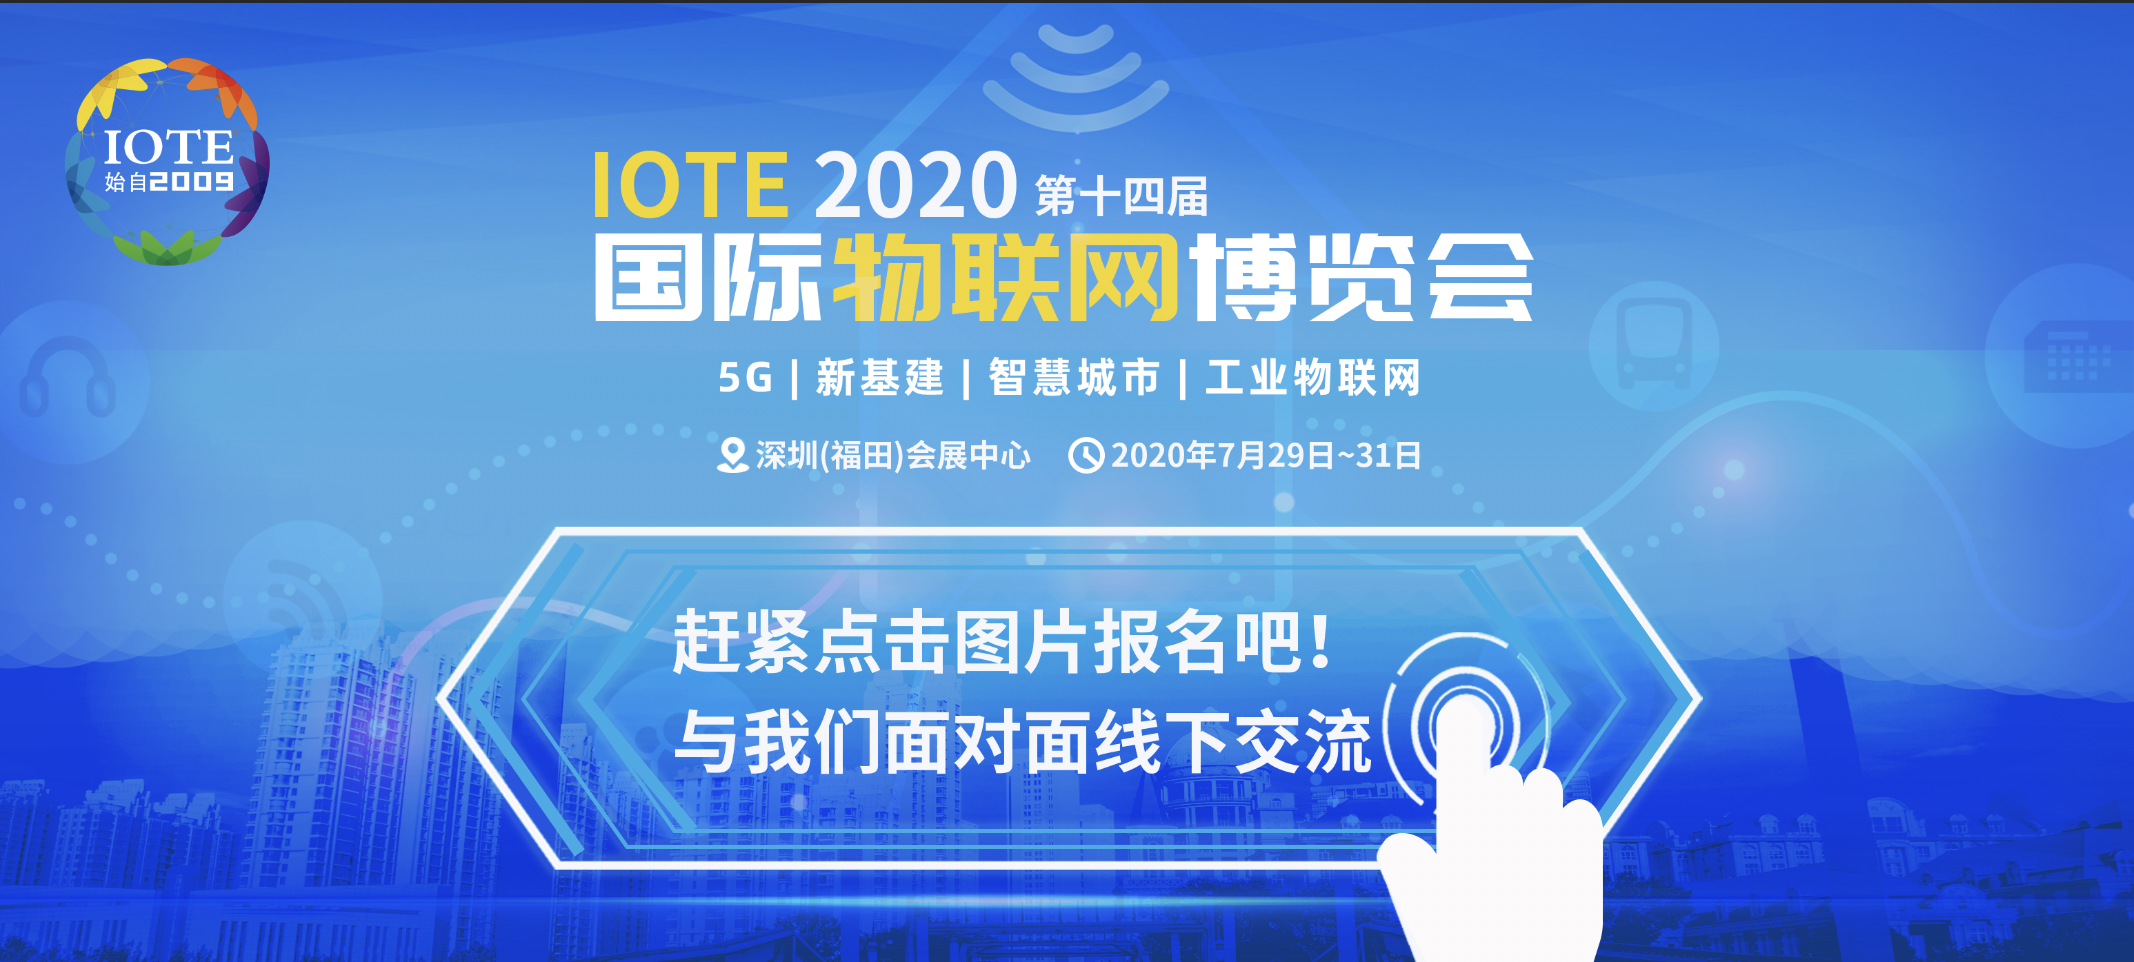 【IOTE 深圳秀】贝锐科技将亮相IOTE 2020深圳国际物联网展